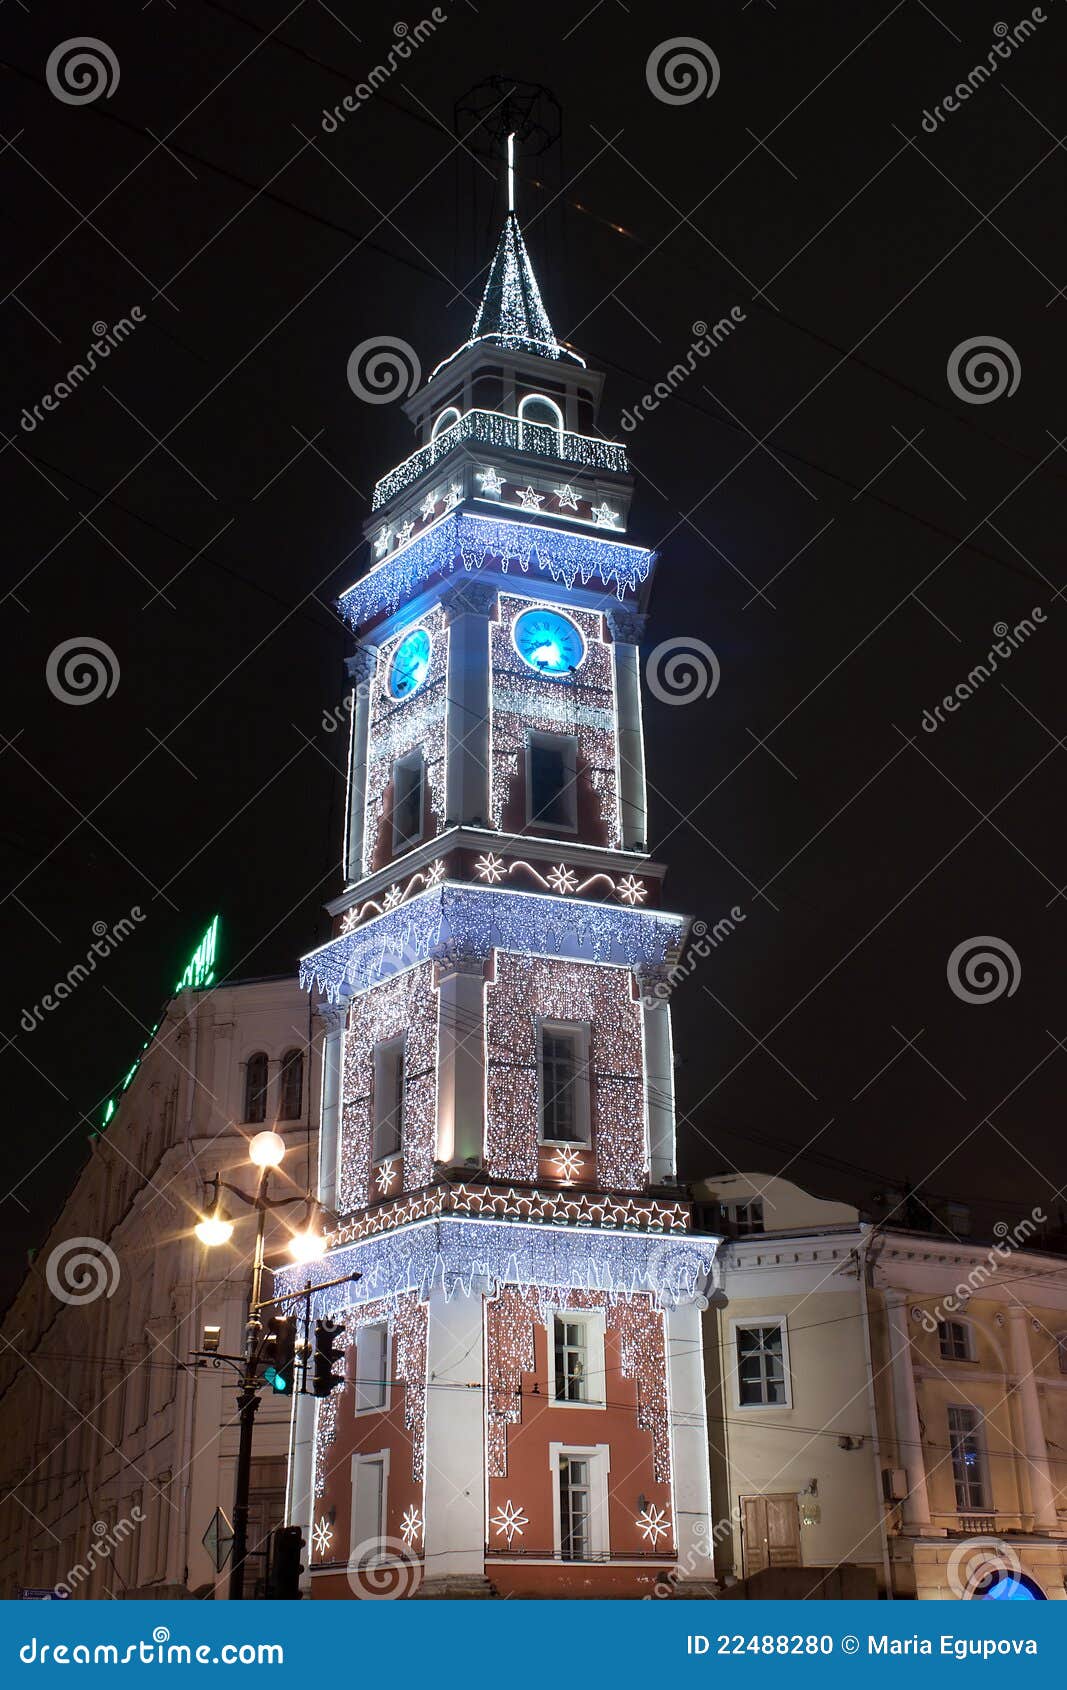 christmas illumination of the duma tower